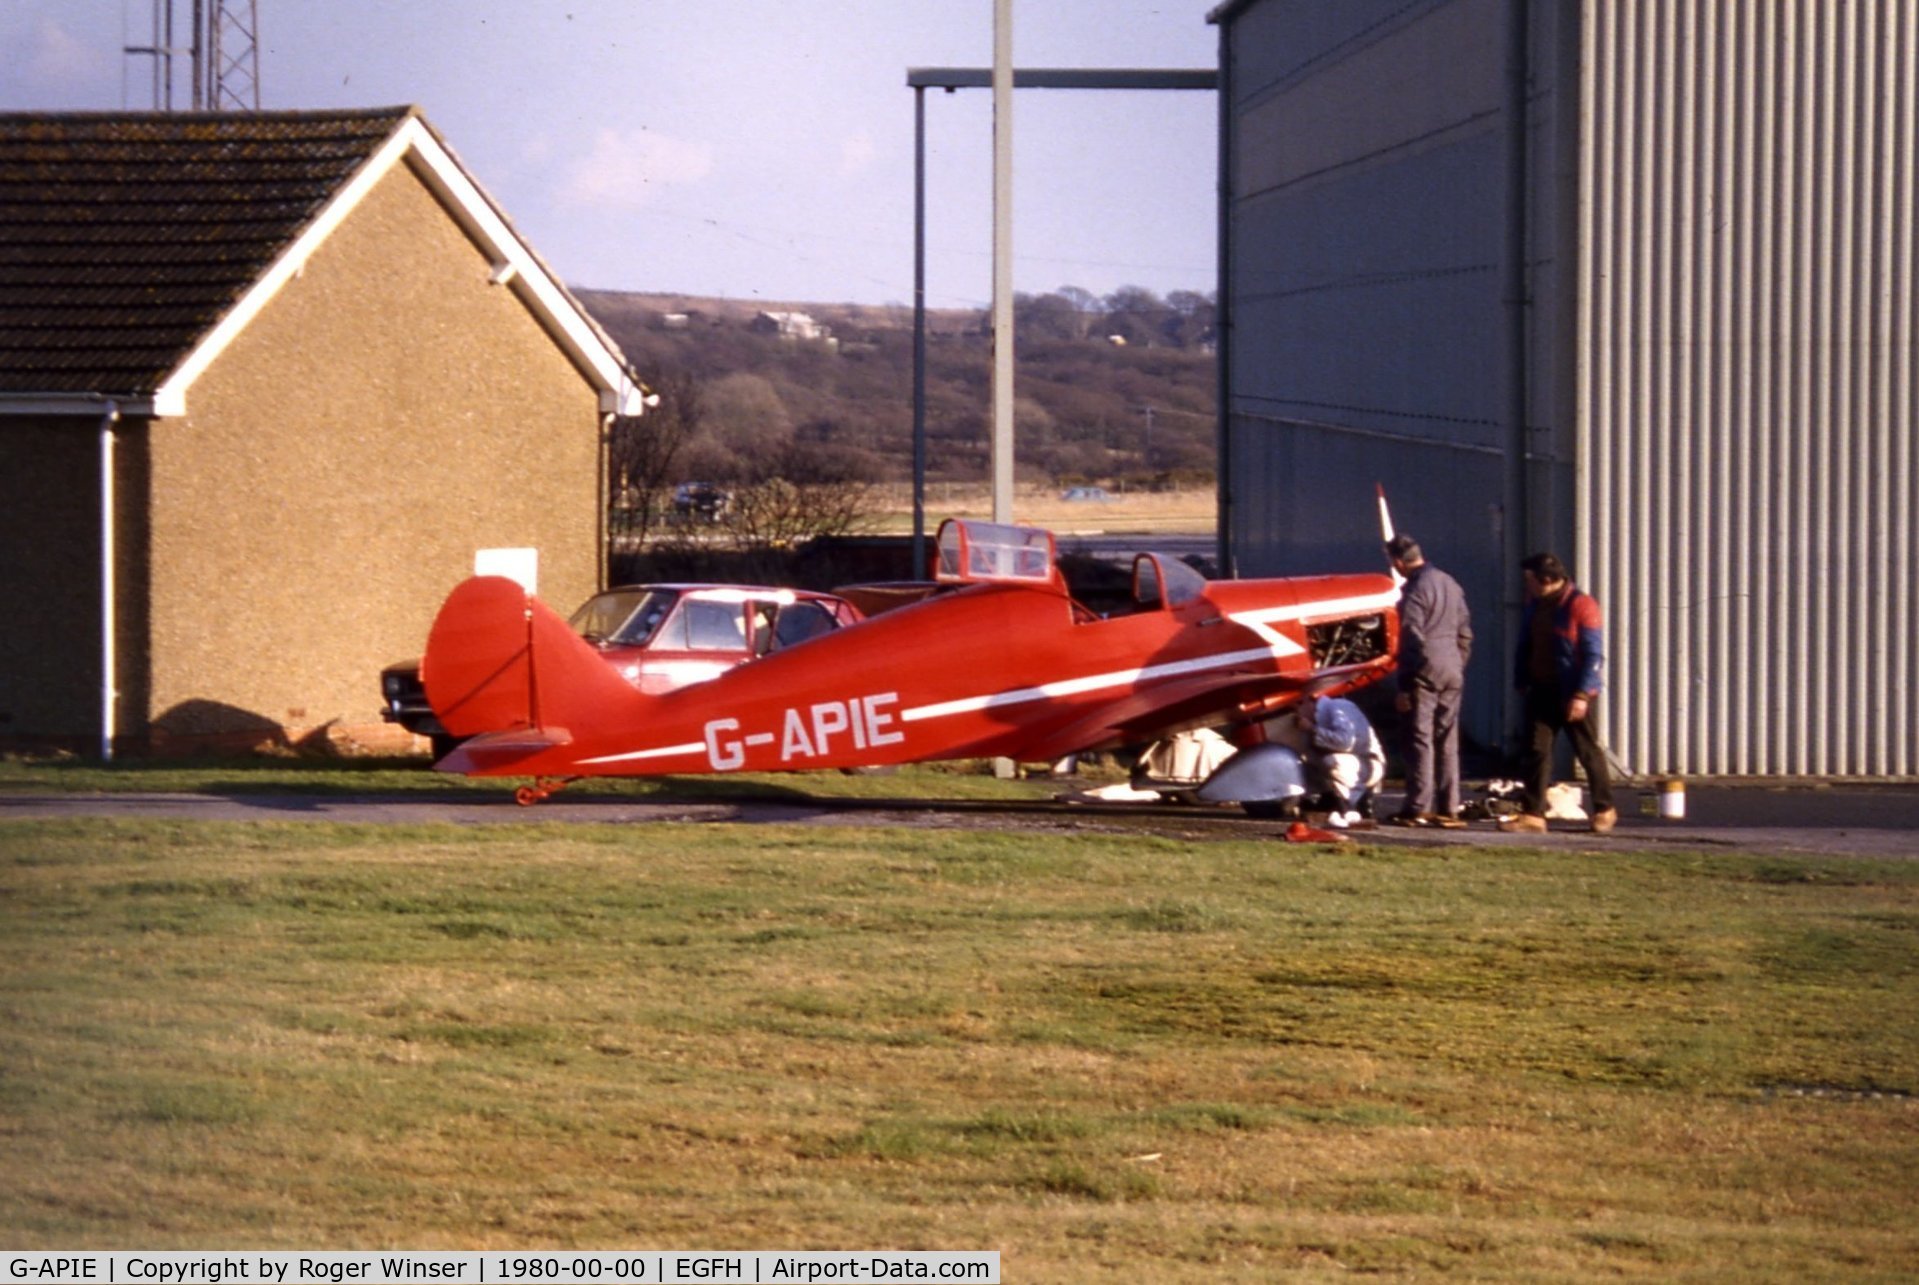 G-APIE, 1958 Tipsy Belfair C/N 535, At Swansea Airport in the early/mid 1980's. Date taken is estimated.